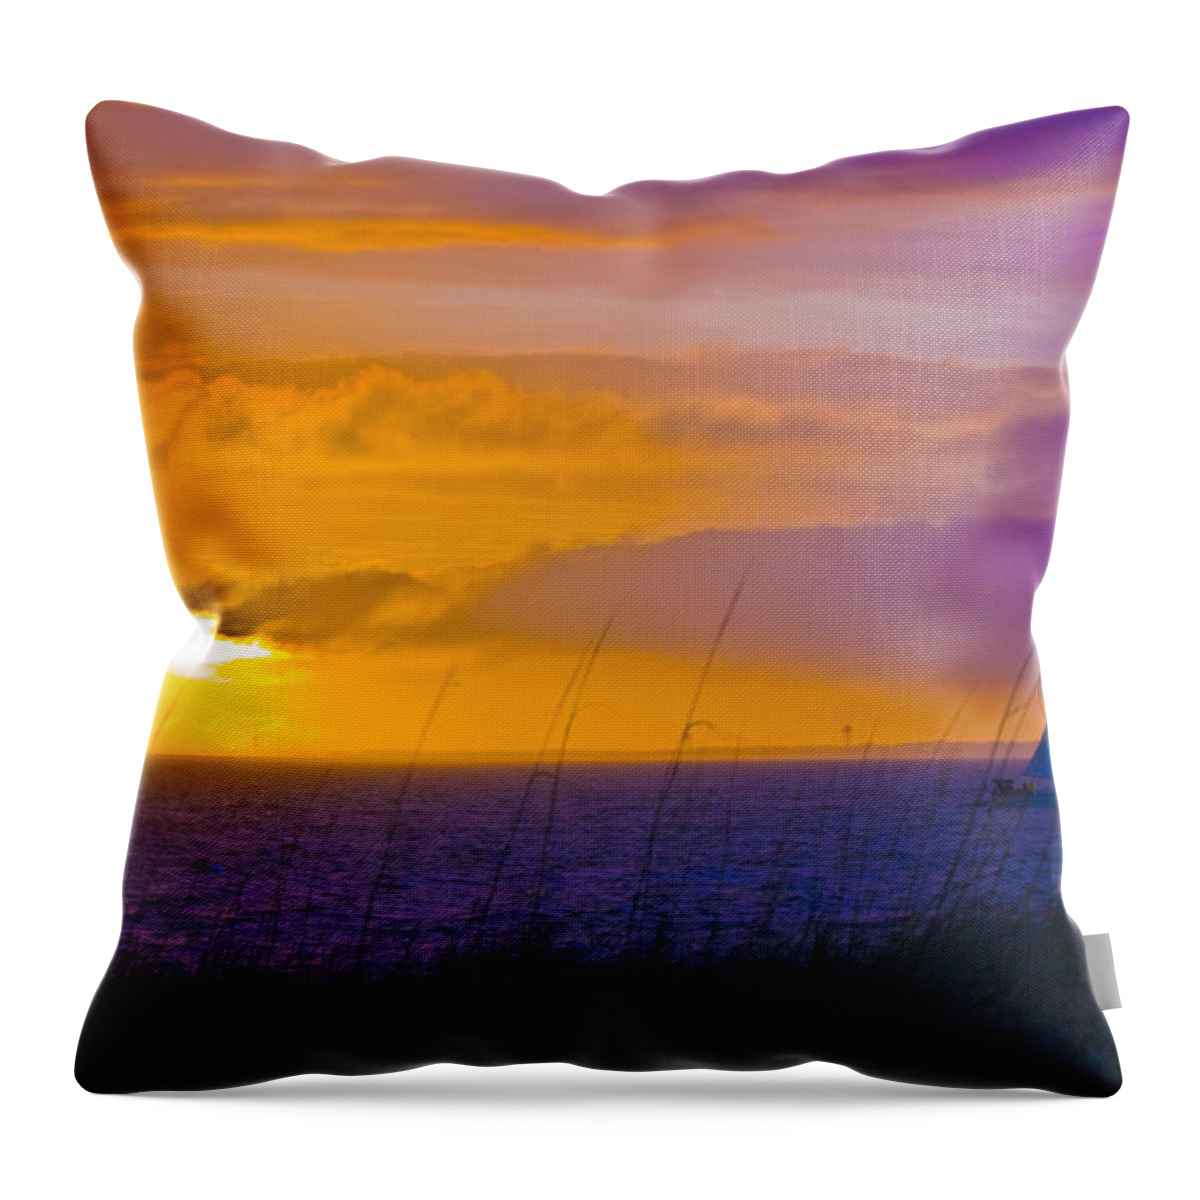 Bald Head Island Throw Pillow featuring the photograph Bald Head Island Study 10 by Betsy Knapp